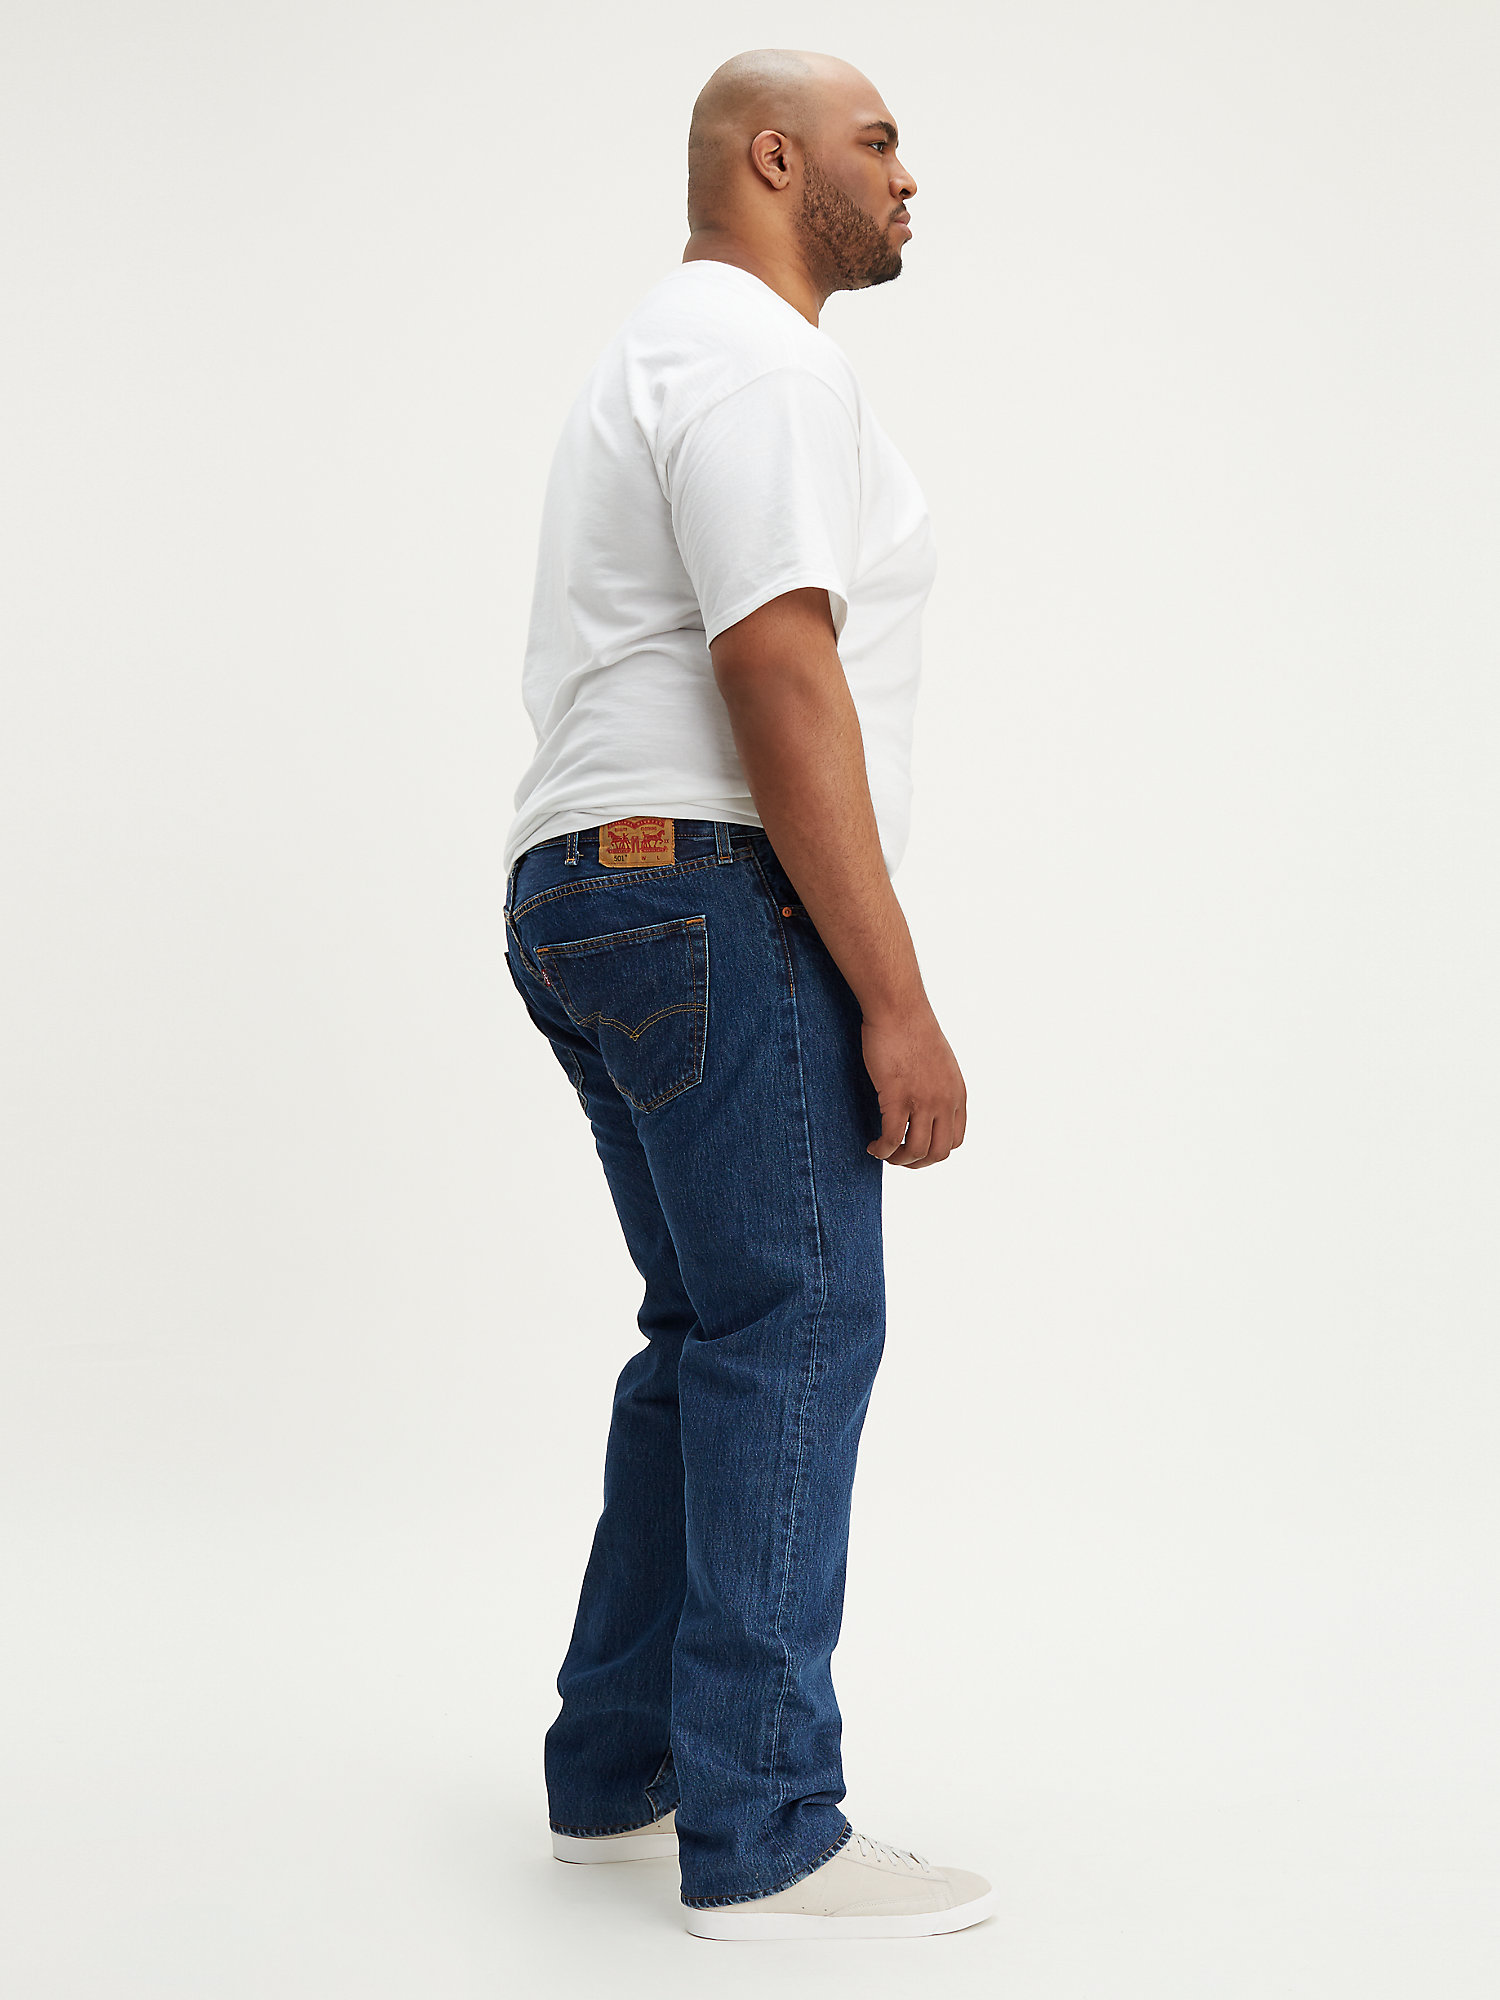 Levi's Men's Big & Tall 501 Original Fit Jeans - image 3 of 6